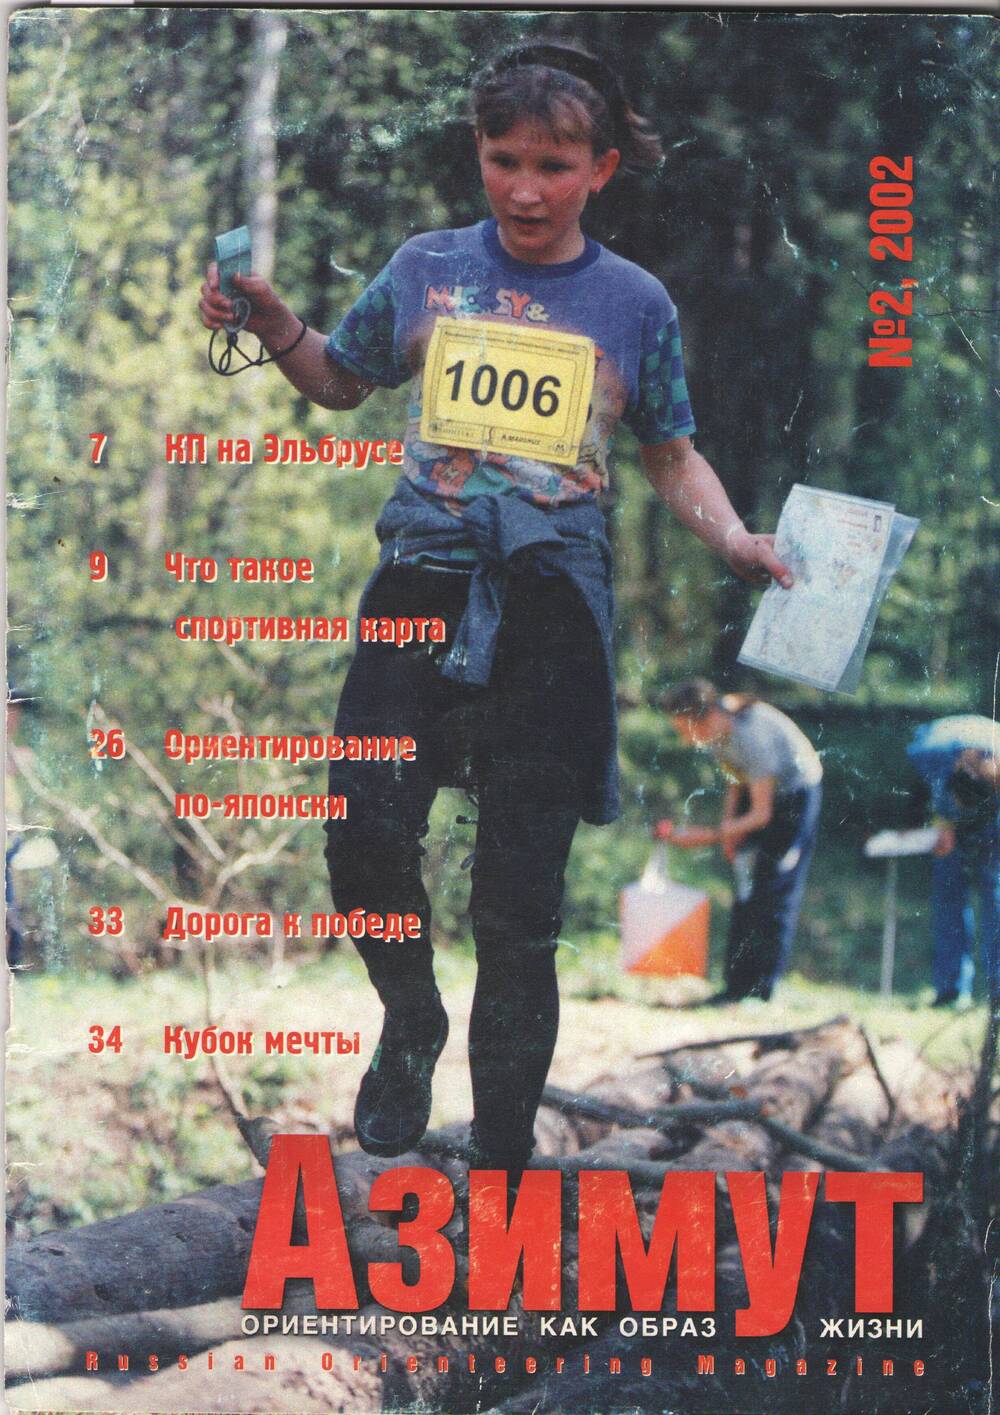 Журнал Азимут. № 2, 2002 год.